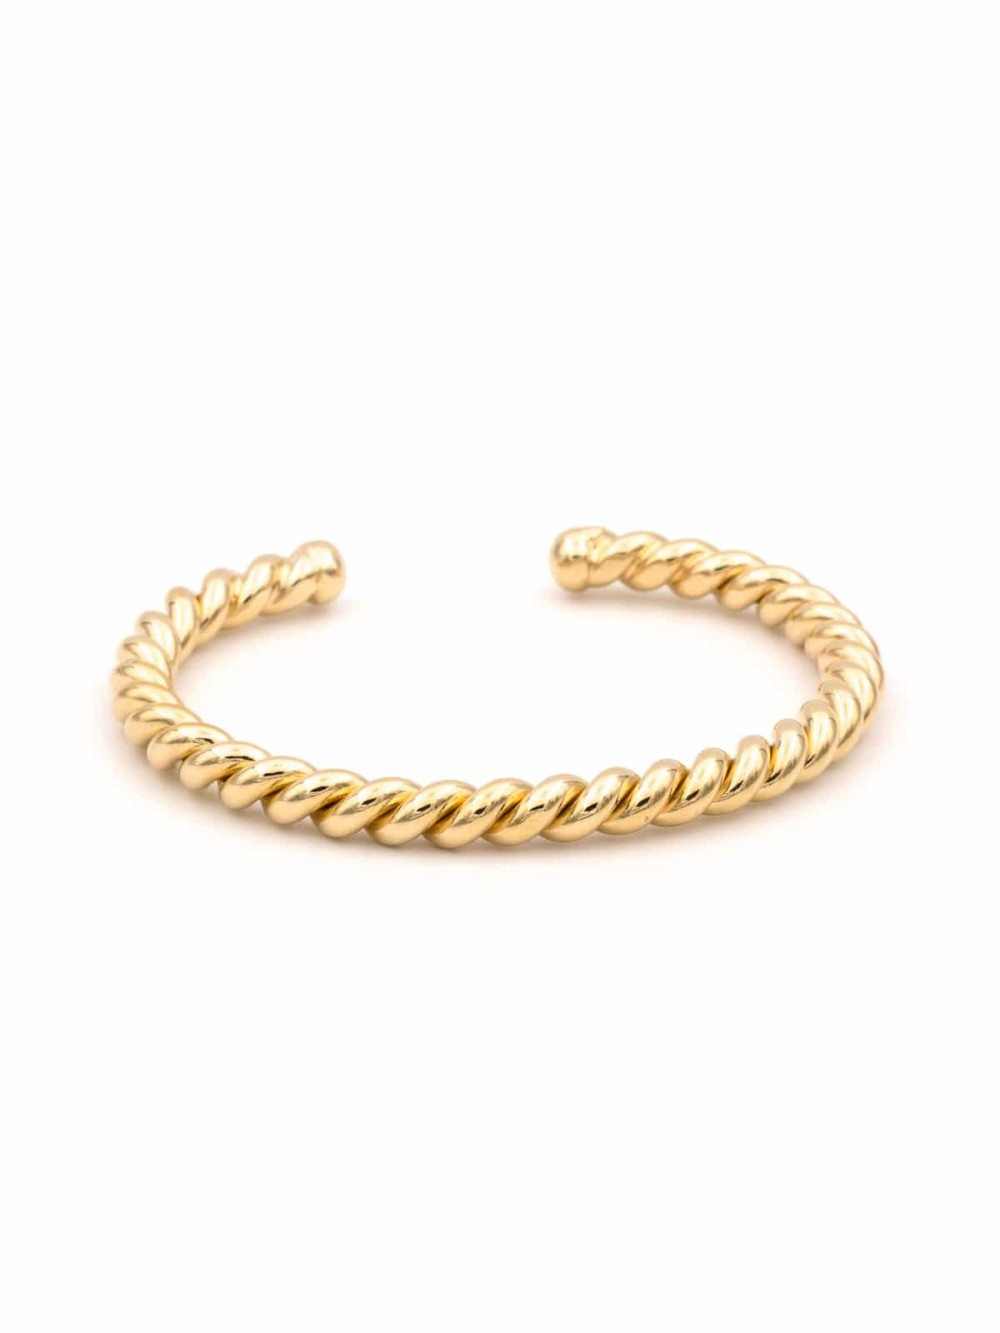 Tendance Trend Bijoux Jewellery Fashion Blog Mode Luj Paris Jonc Bracelet Tresse Or Gold